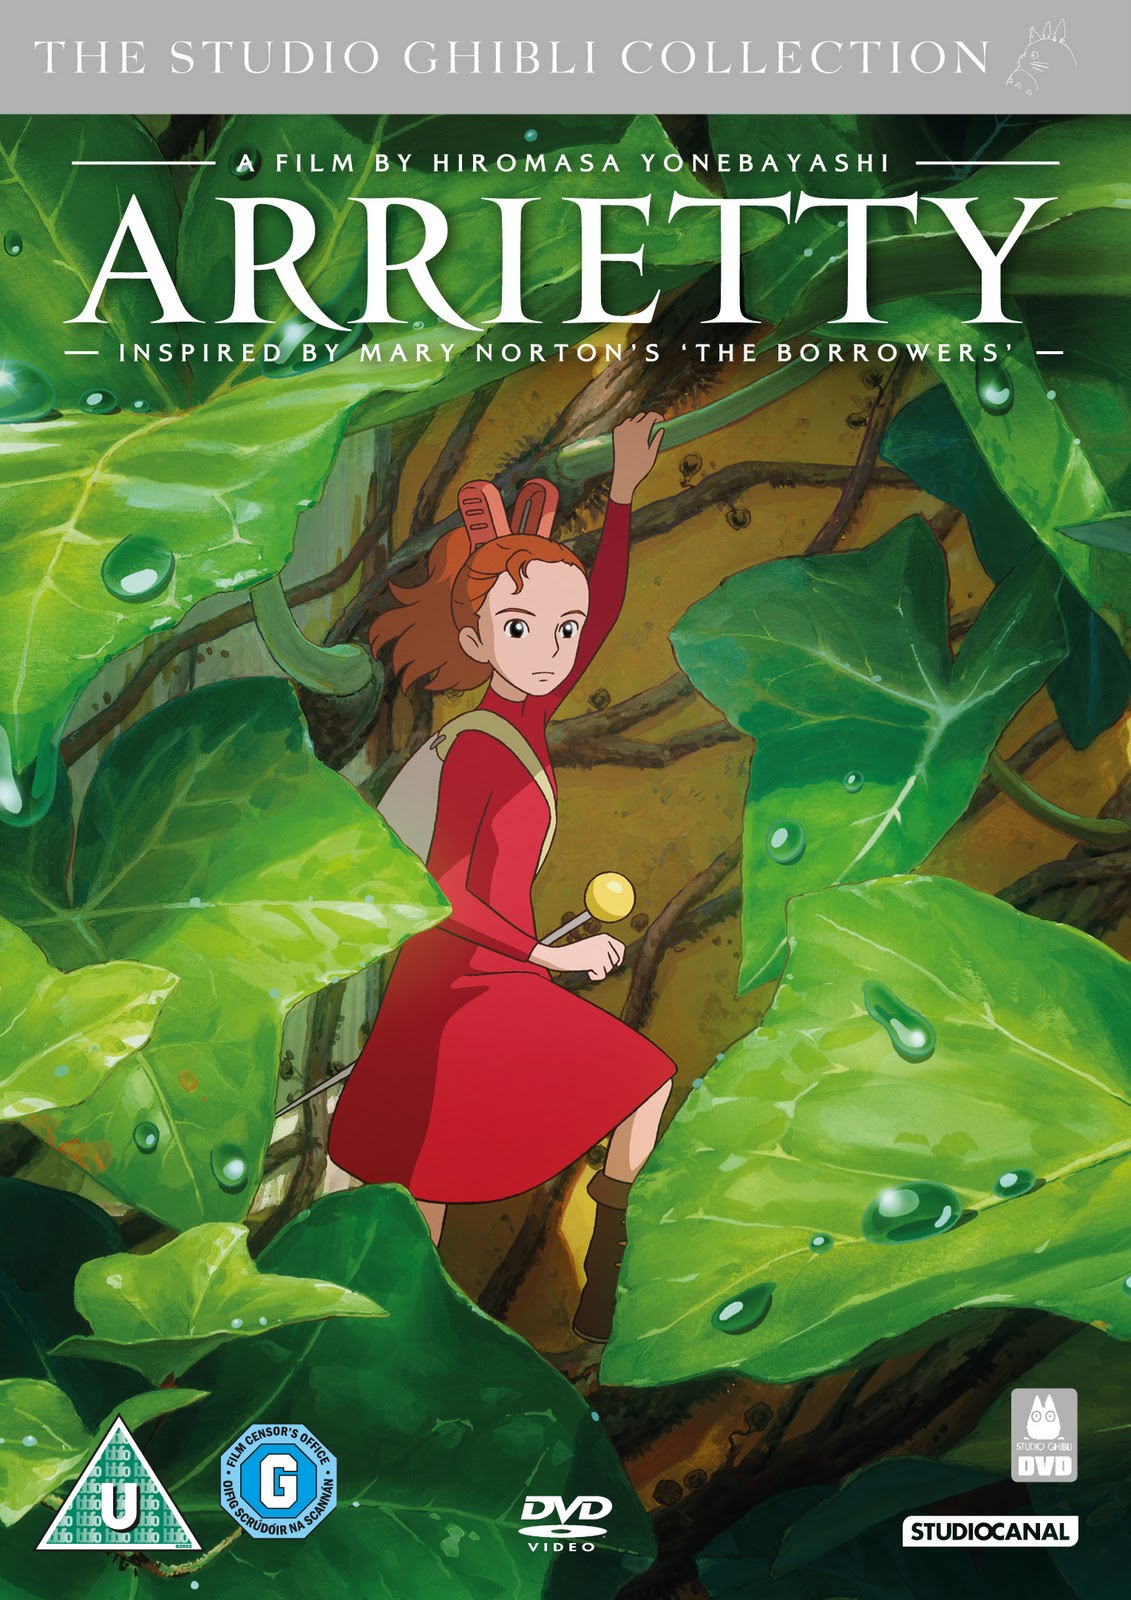 31 Top Pictures Studio Ghibli Movies Netflix Uk : Studio Ghibli movies are coming to streaming services like ...